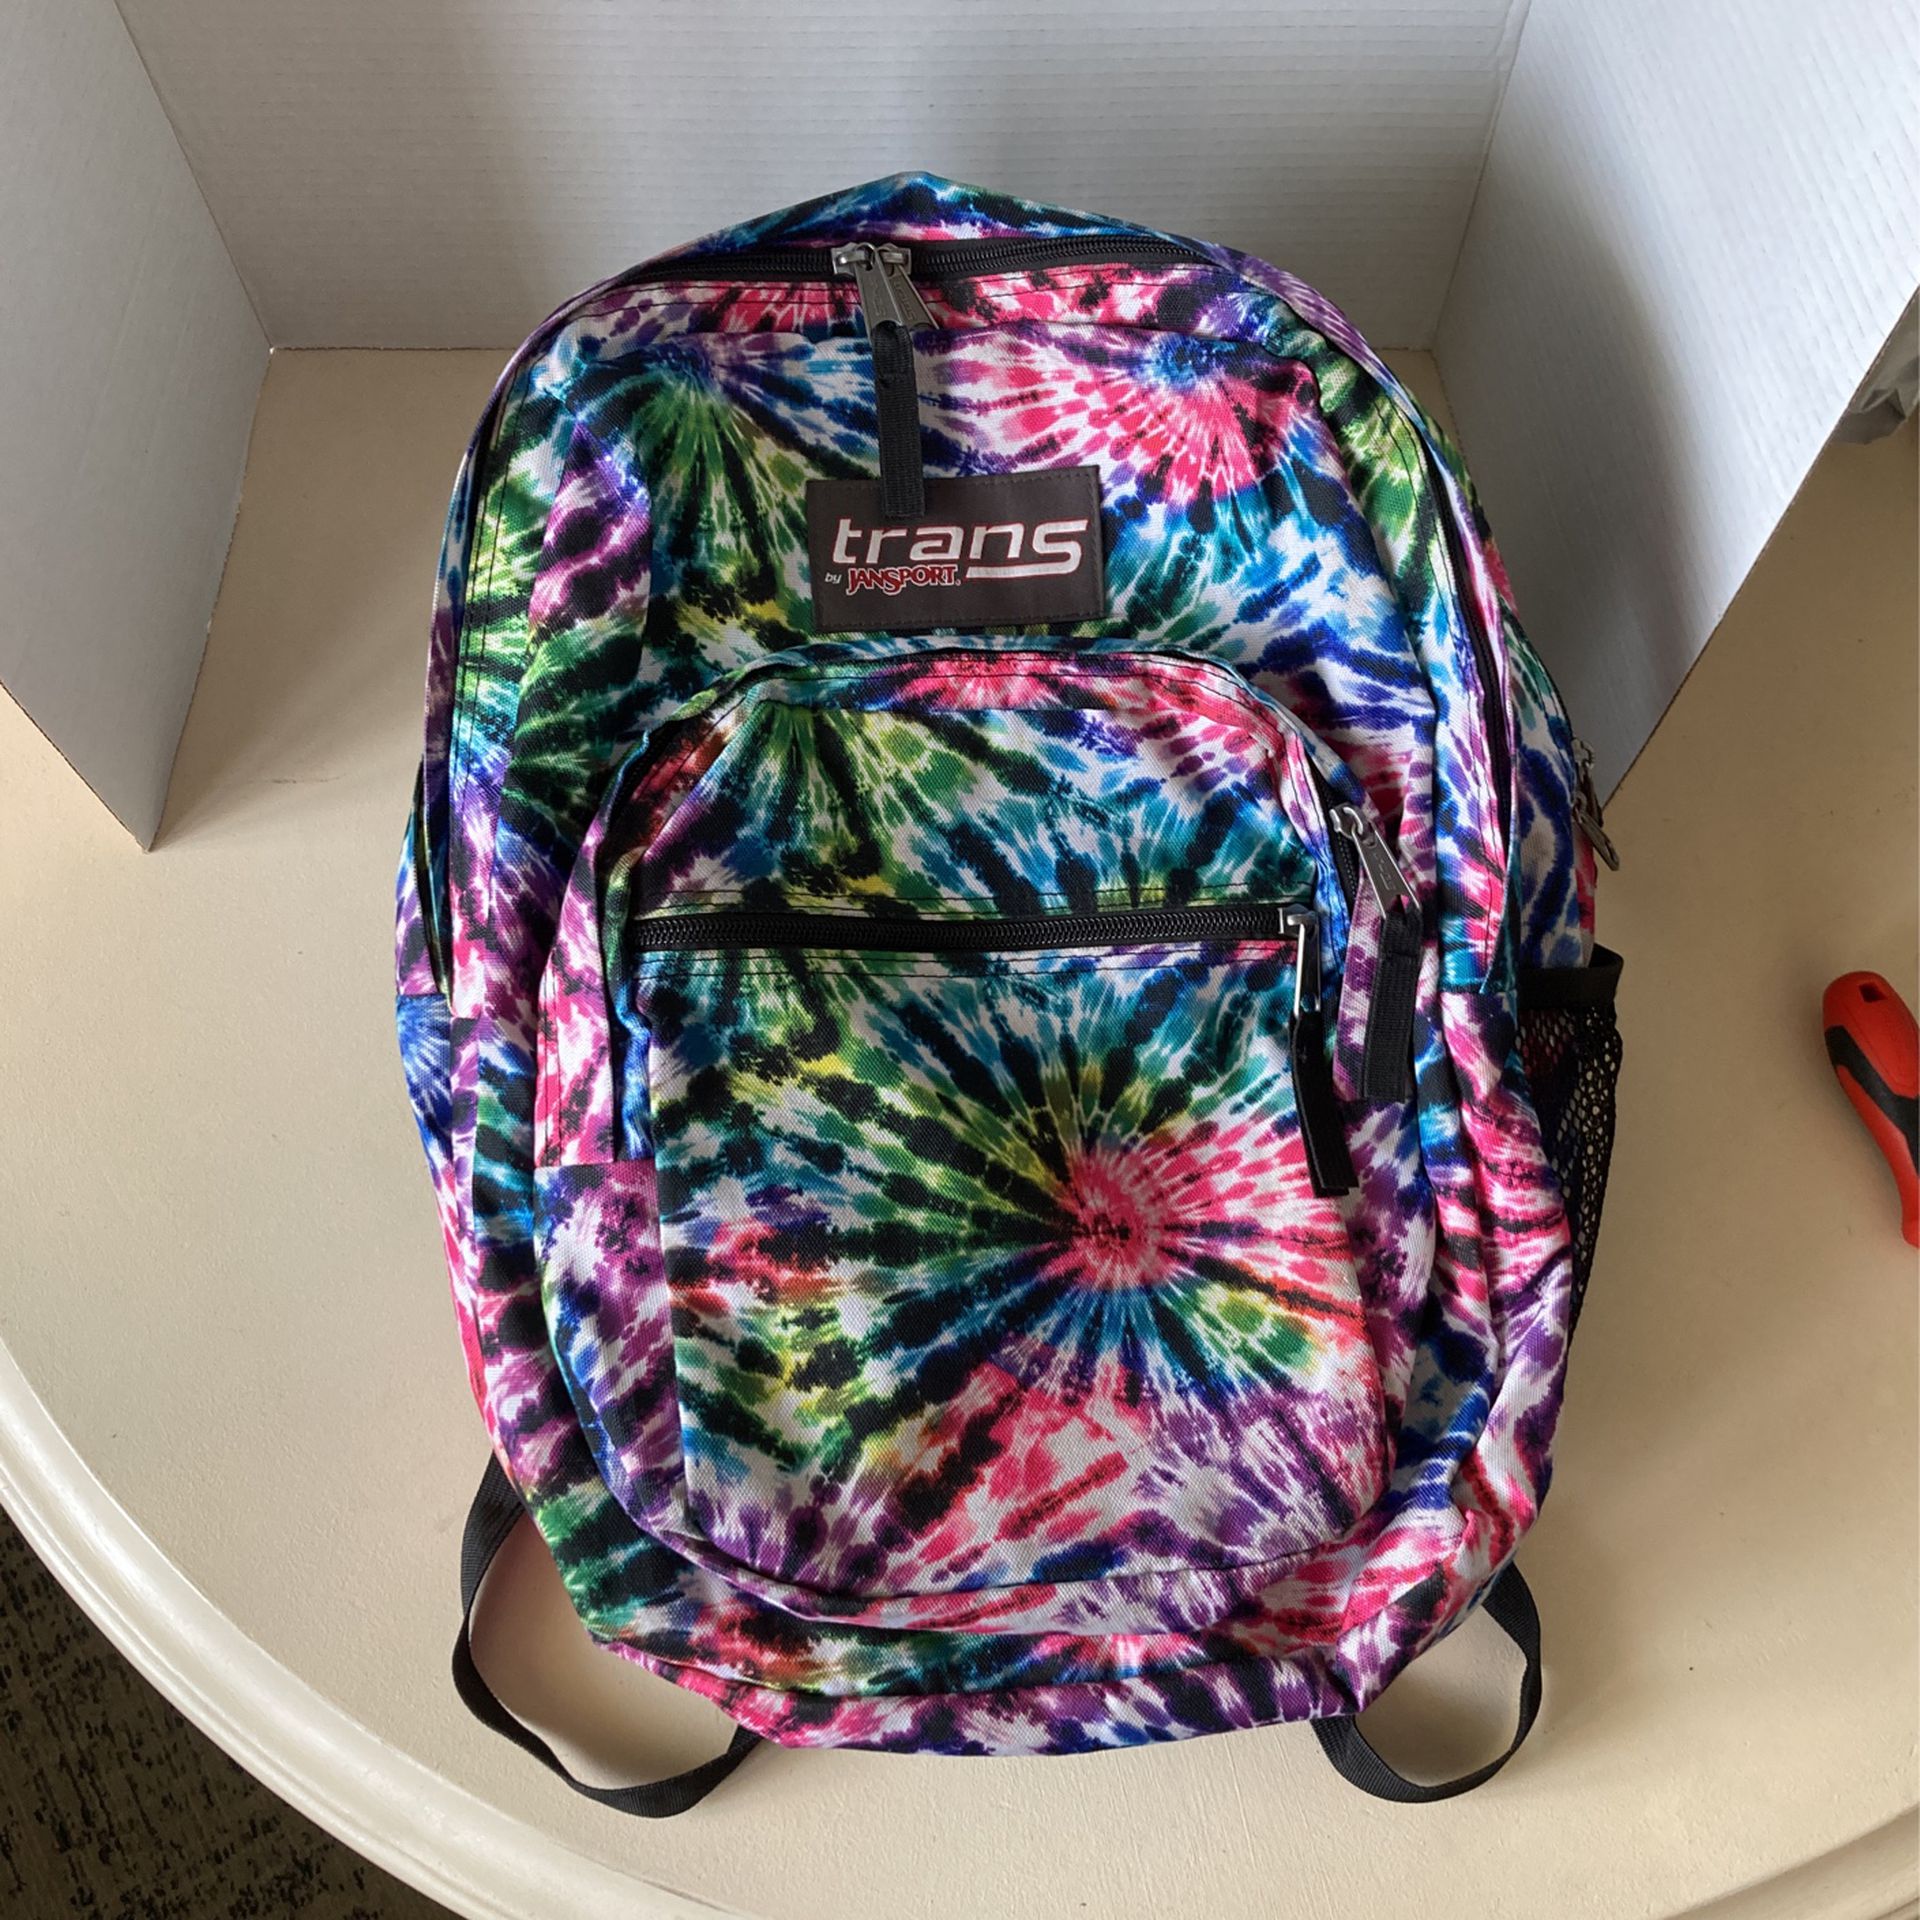 Trans by JanSport 17" SuperMax Backpack - Tie Dye Swirls with Laptop Sleeve